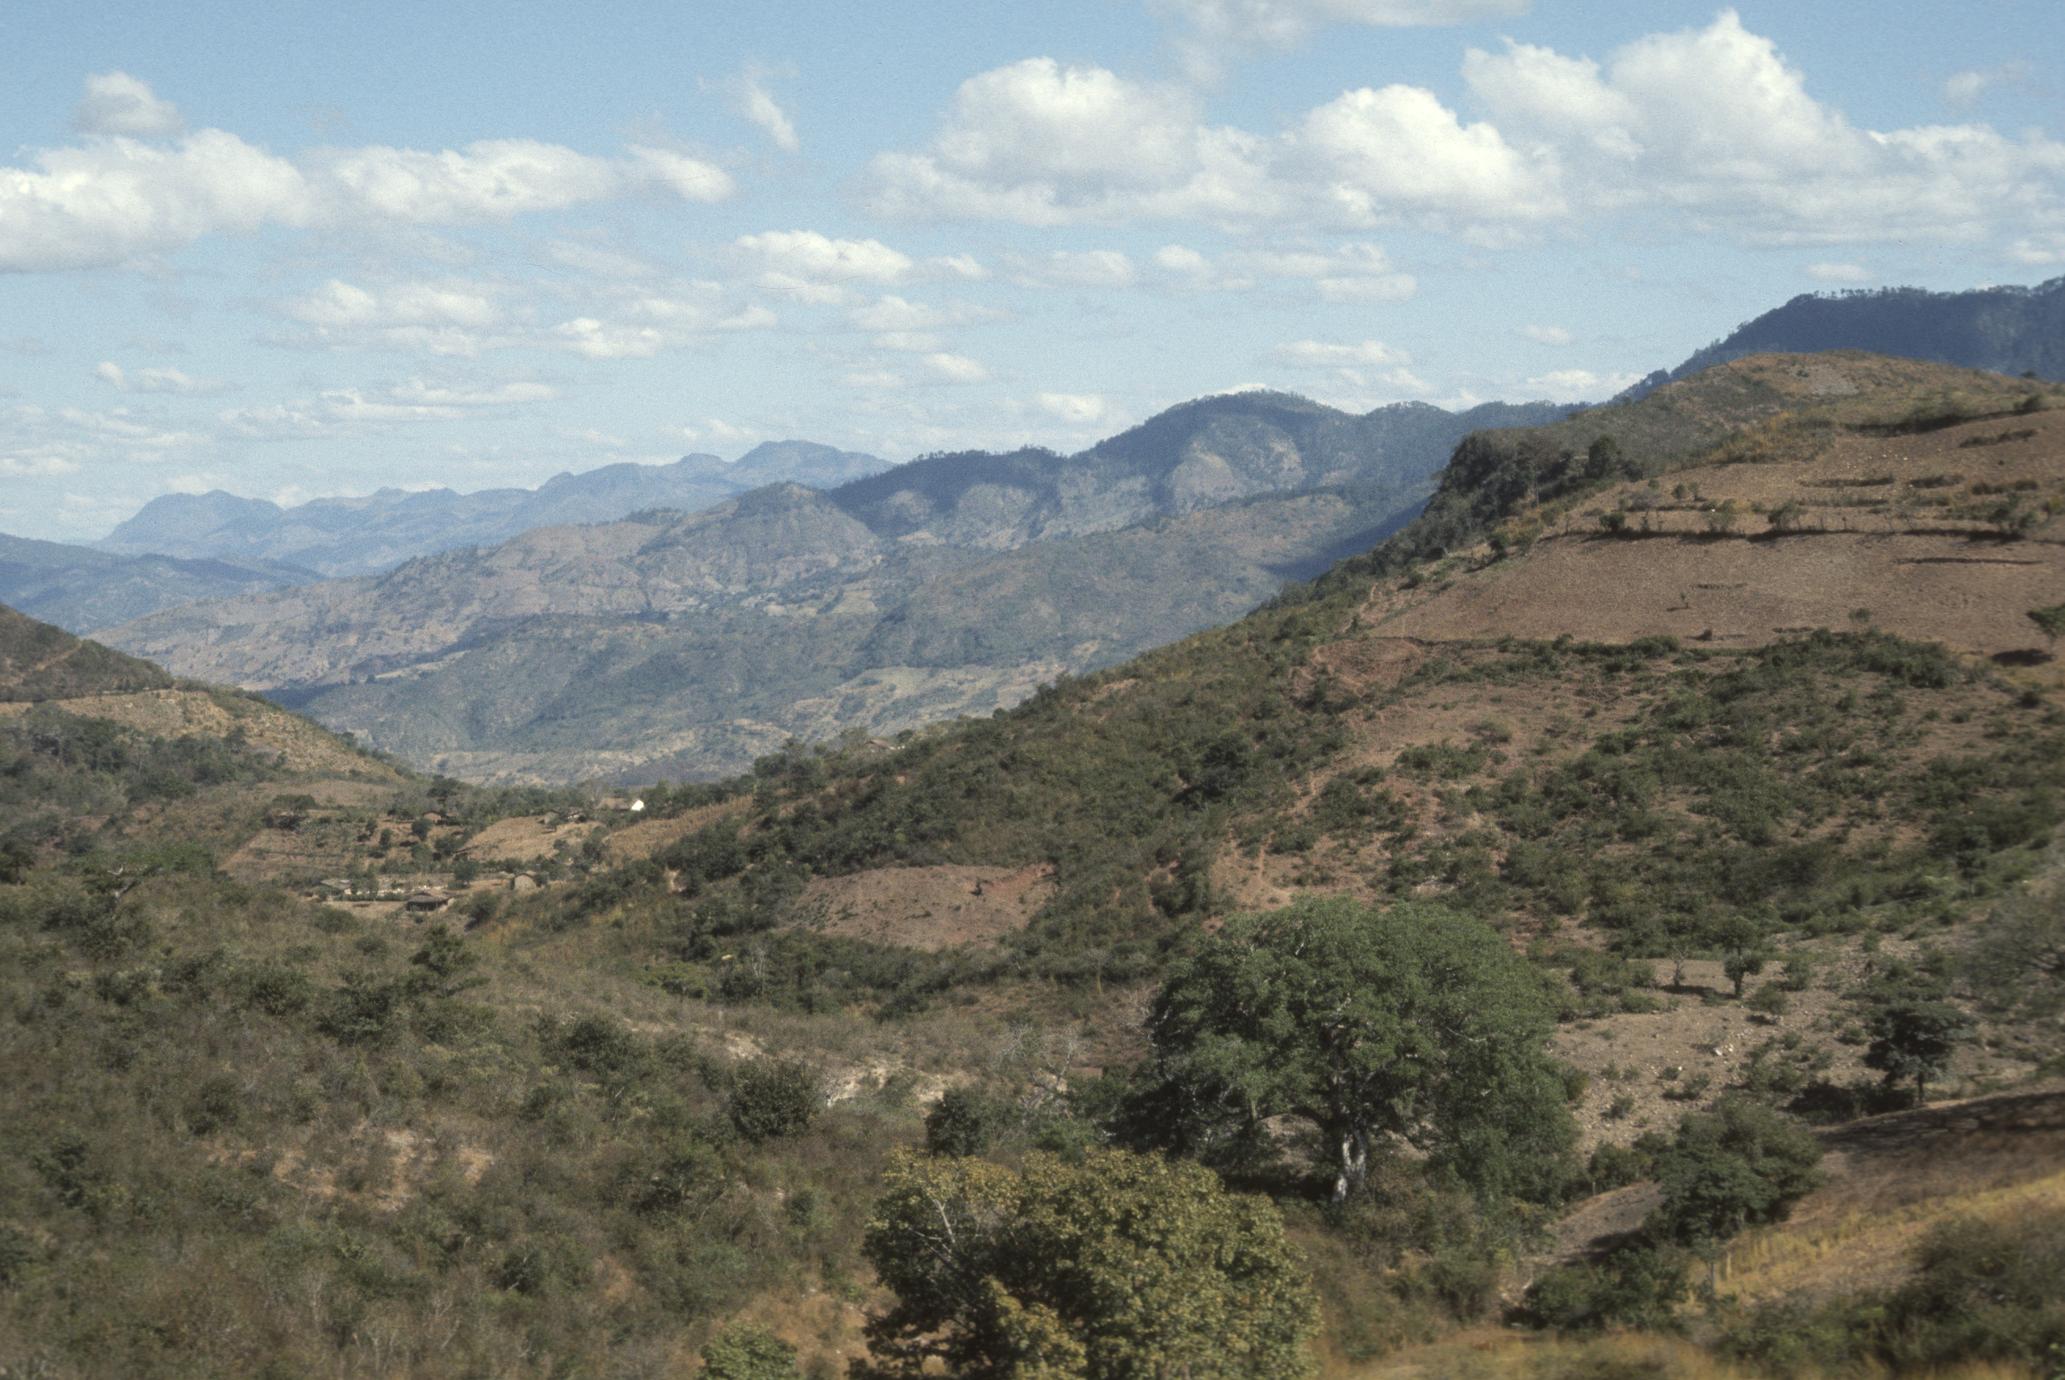 Hills, supposedly with teosinte, near El Rincon